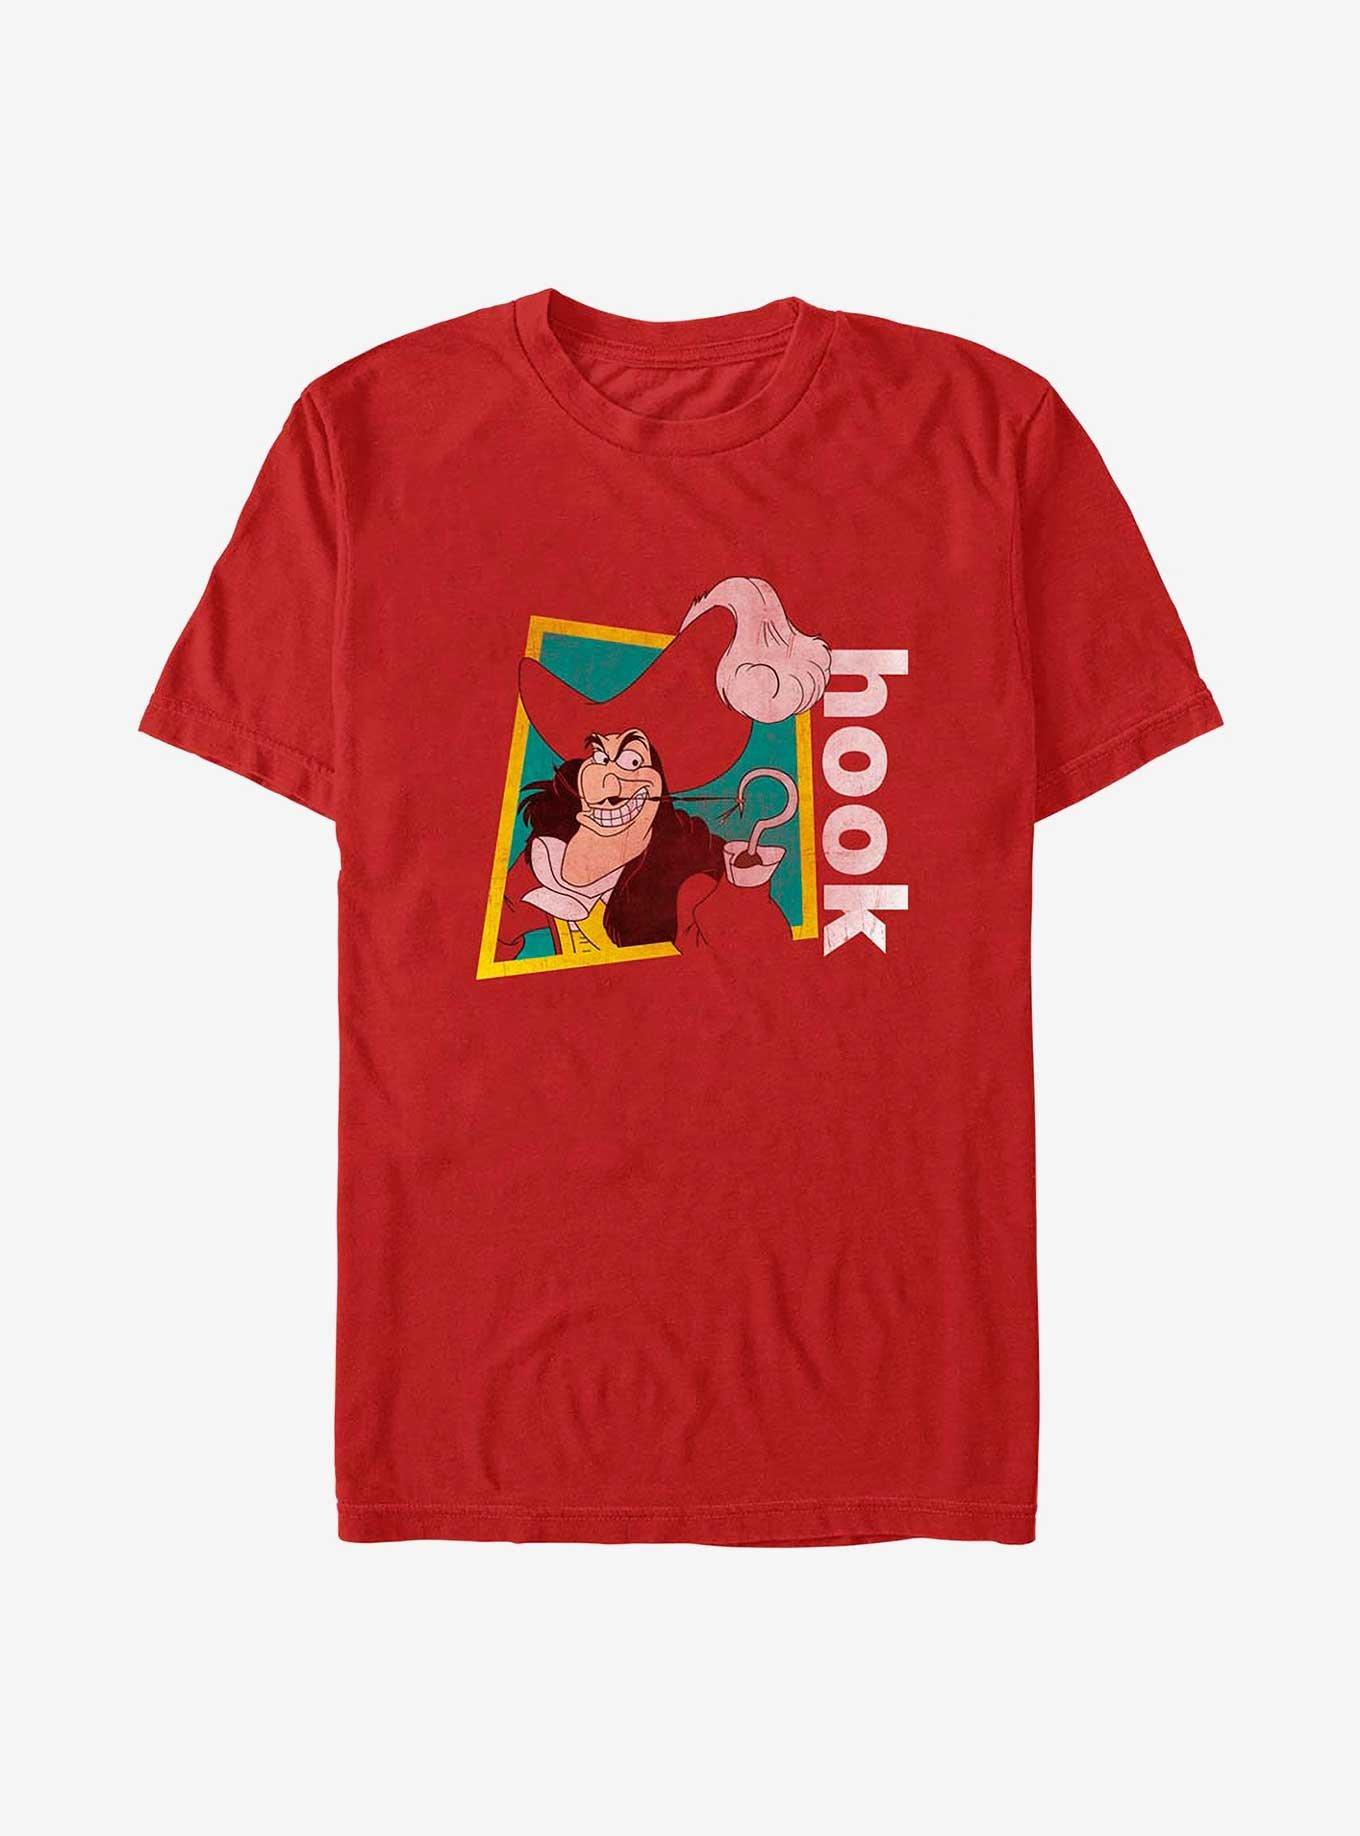 Hot Topic Disney Peter Pan 90's Captain Hook T-Shirt